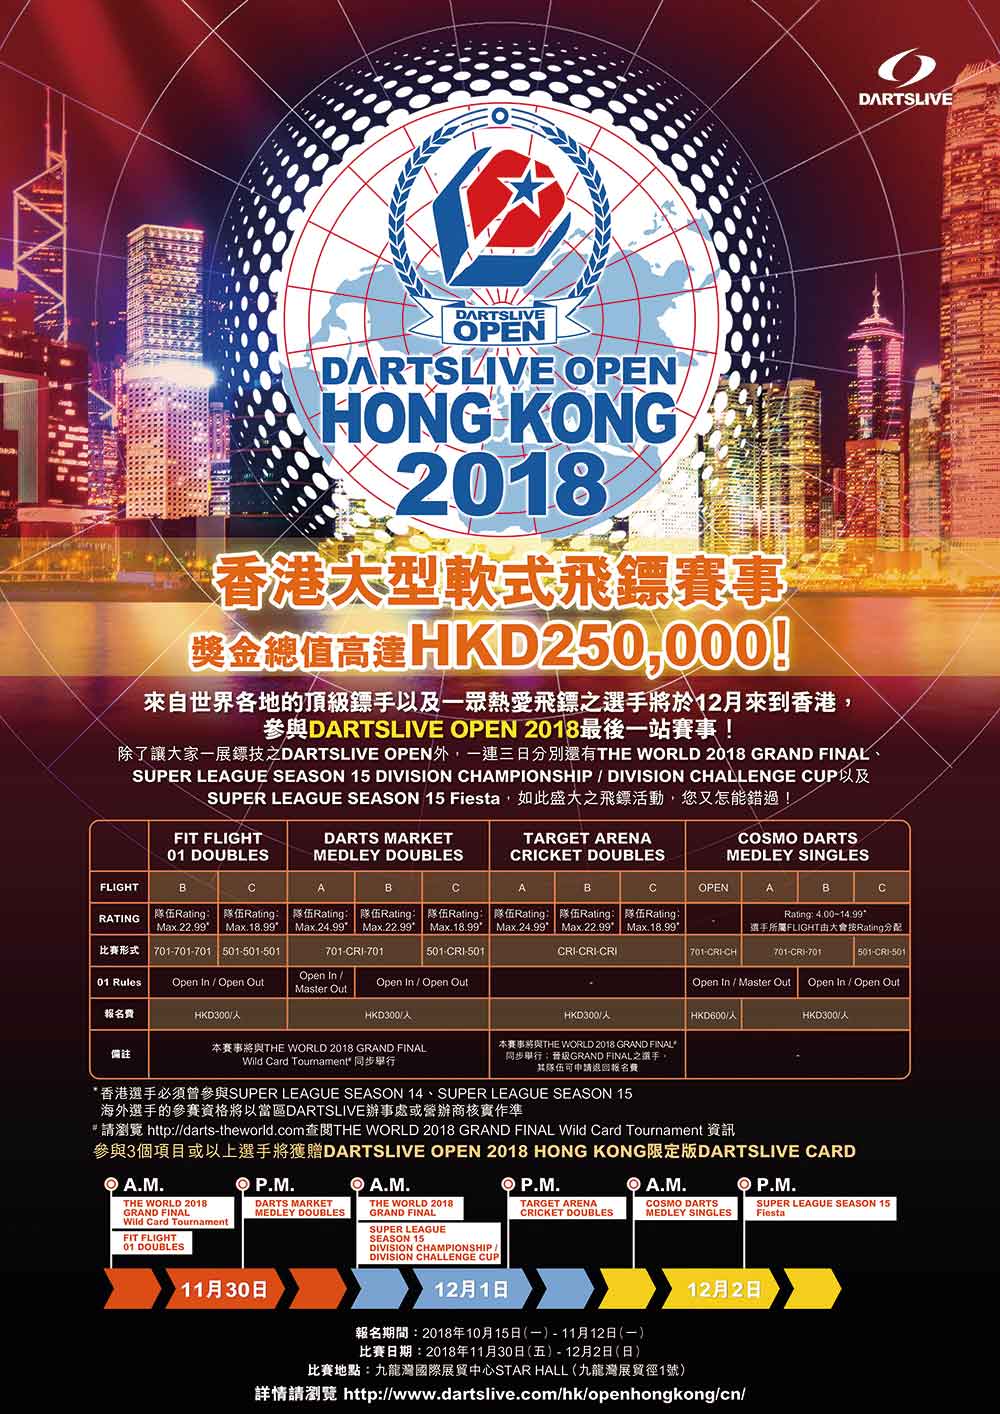 Dartslive Hong Kong Open